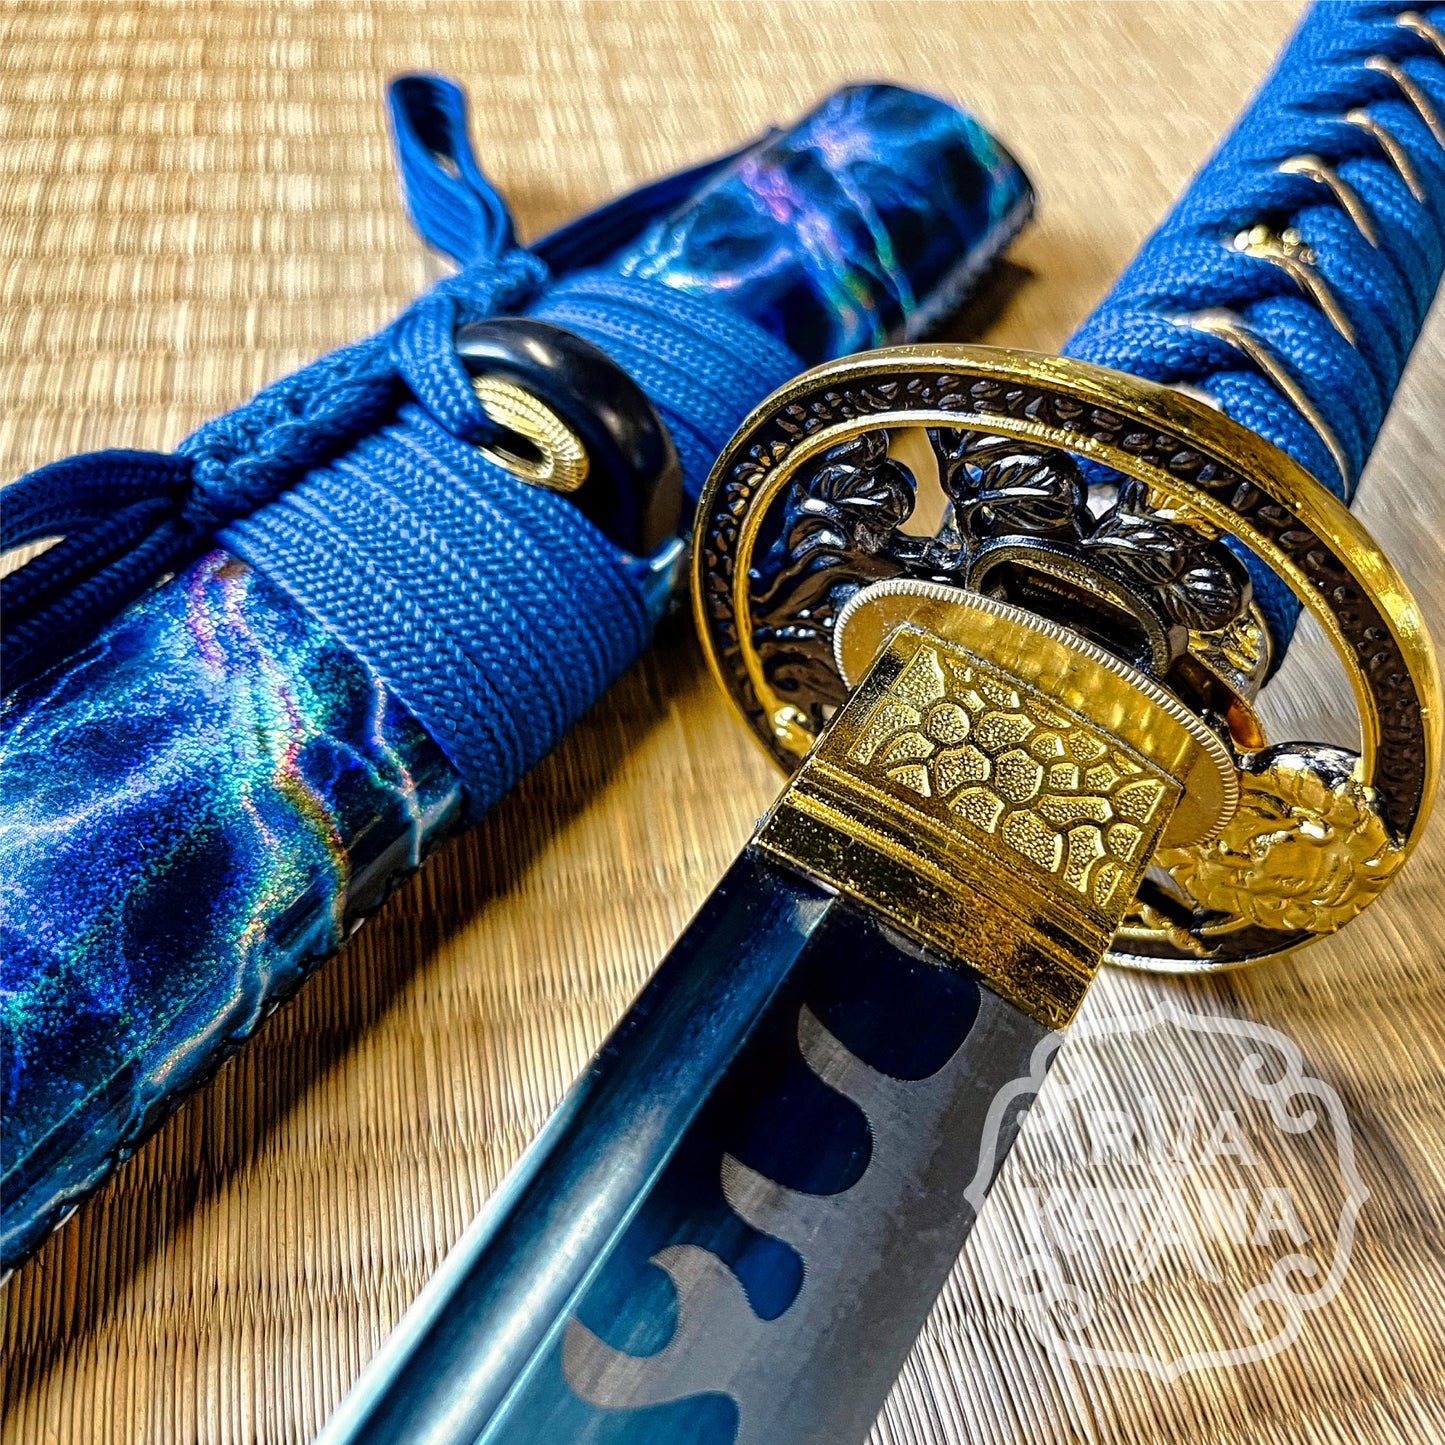 Katana, 1060 Steel, Blue Blade, Golden Lion Theme